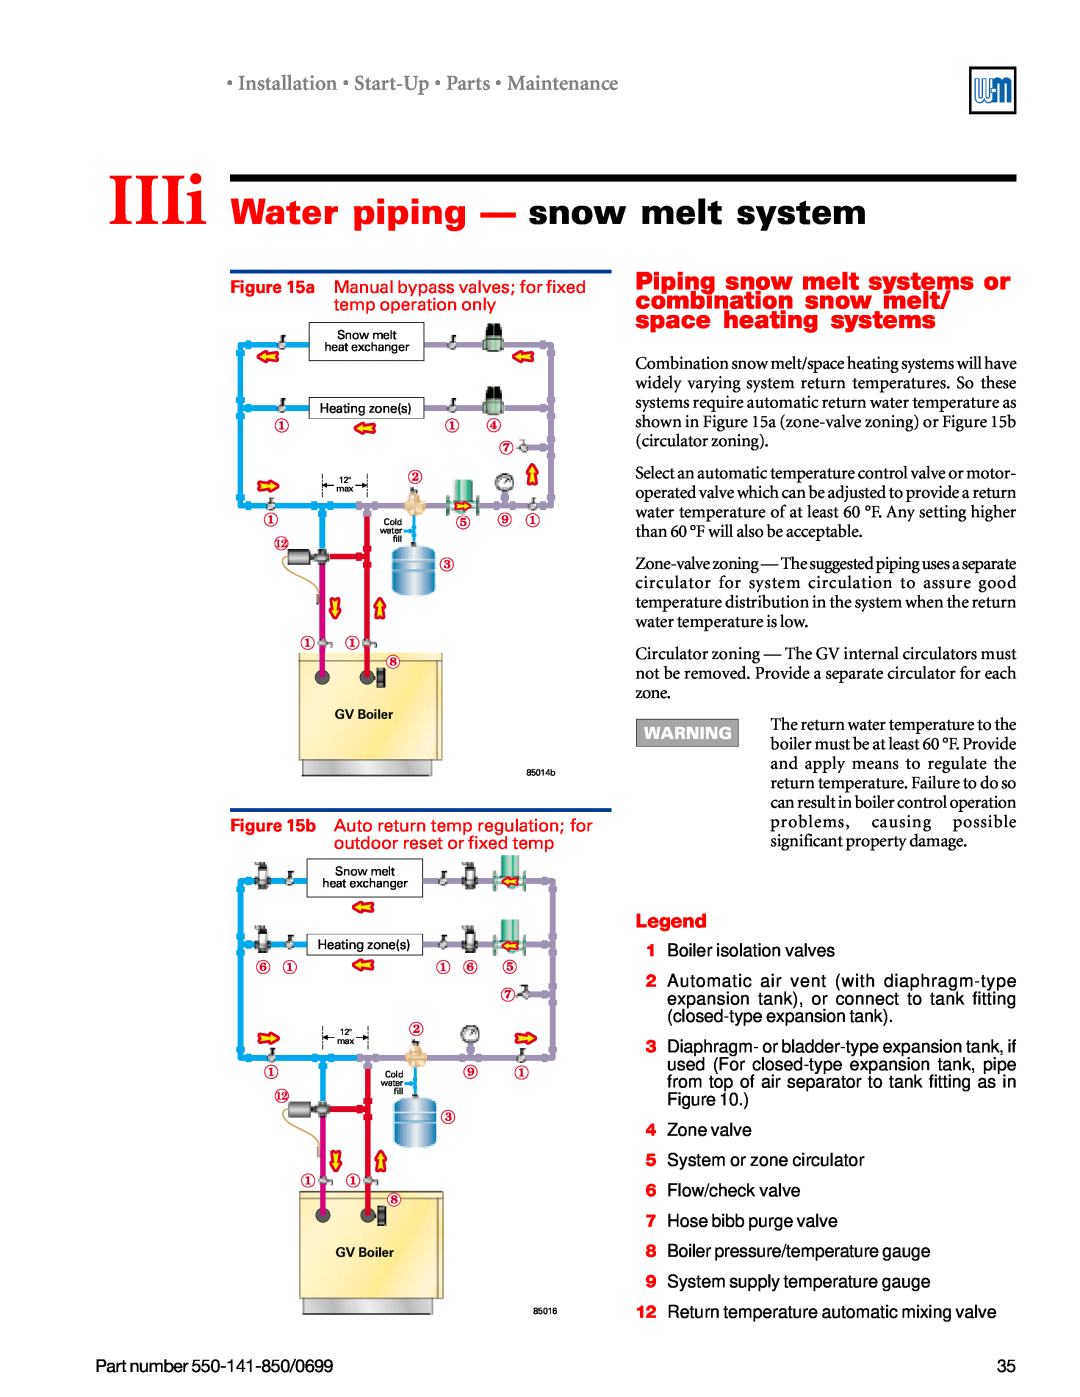 Weil-McLain 550-141-850/0599 IIIi Water piping — snow melt system, •Installation • Start-Up• Parts • Maintenance, Legend 